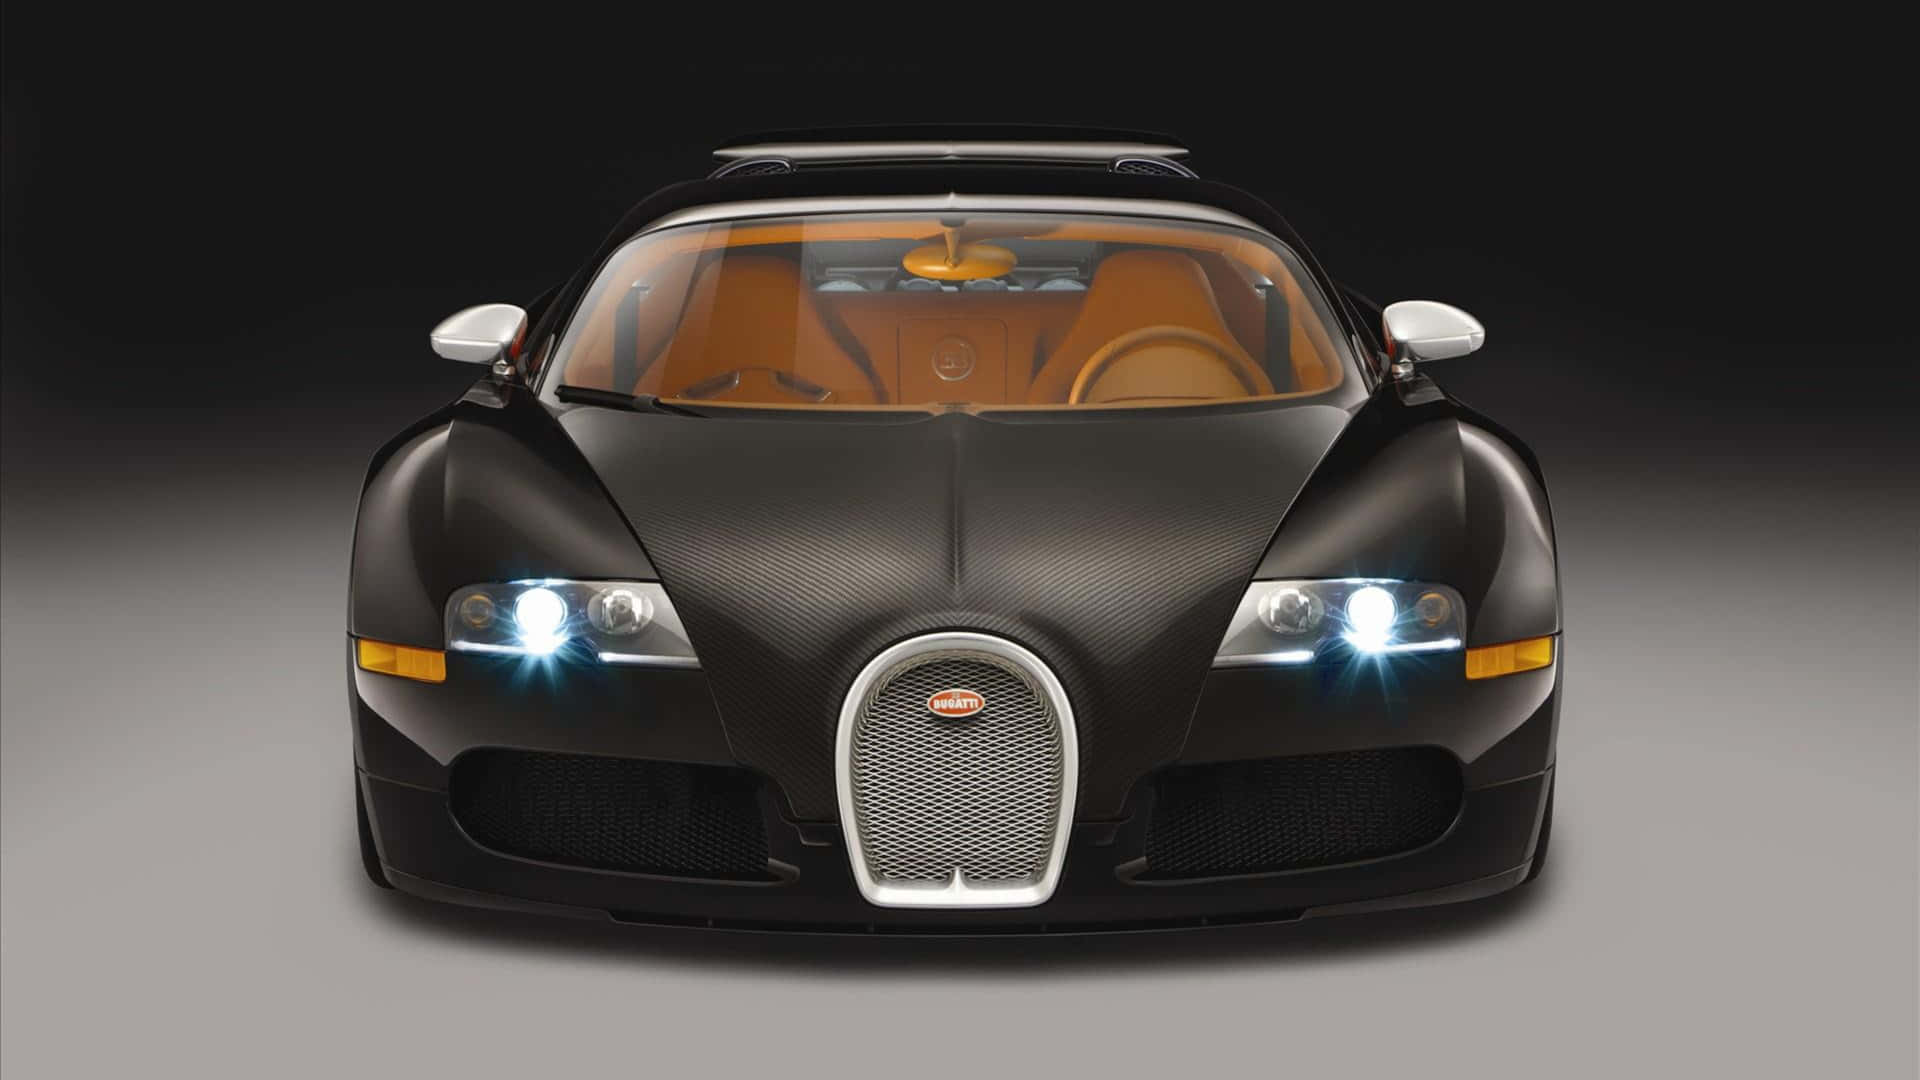 Echaun Vistazo A Este Impresionante Bugatti Rojo Y Negro De Diseño Aerodinámico. Fondo de pantalla